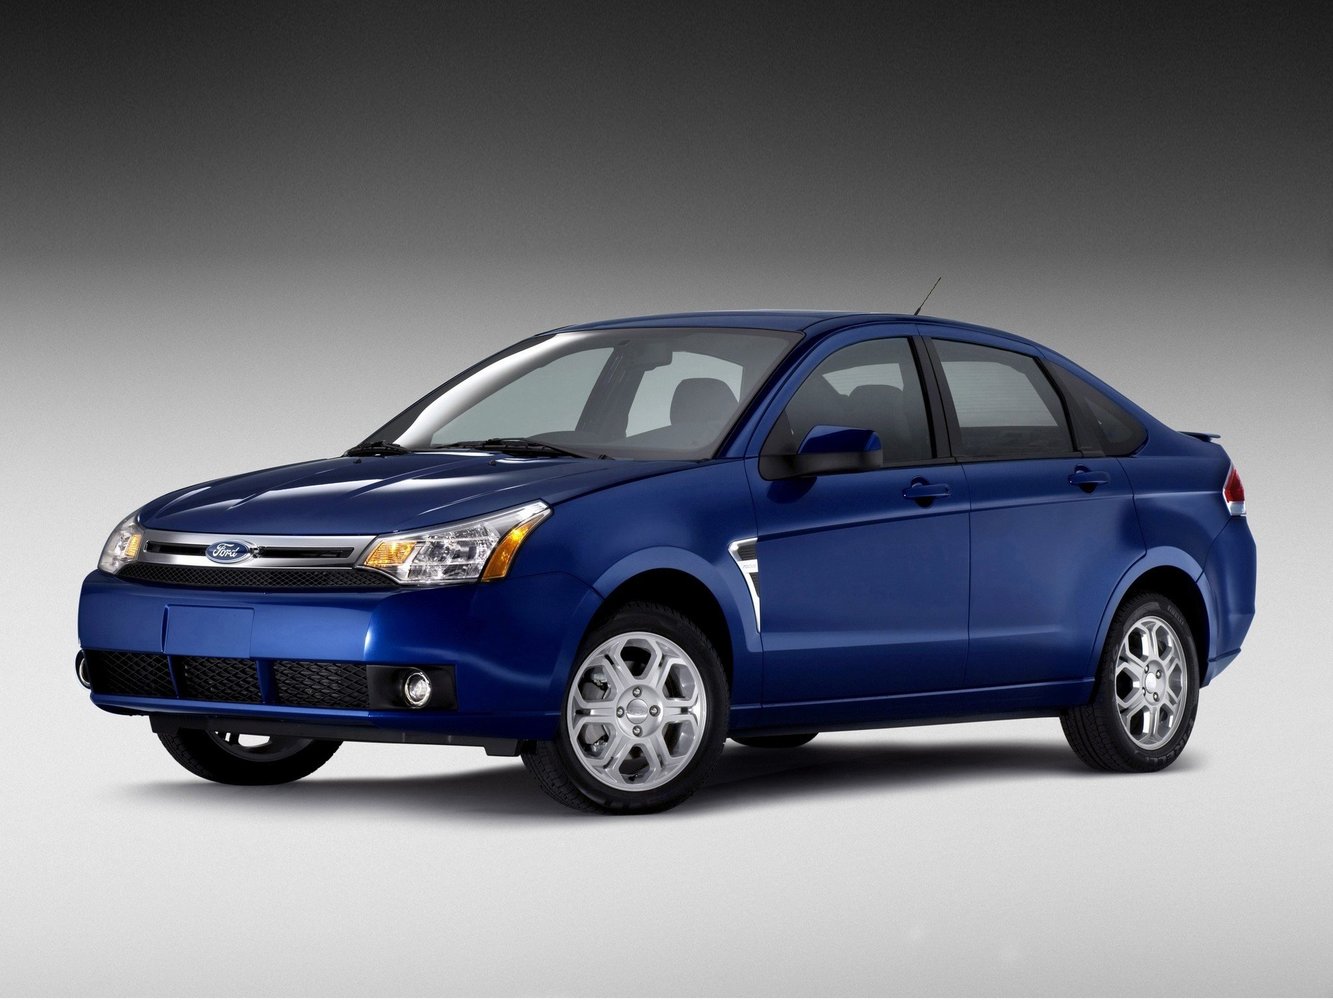 Ford Focus (North America) 2007 - 2011